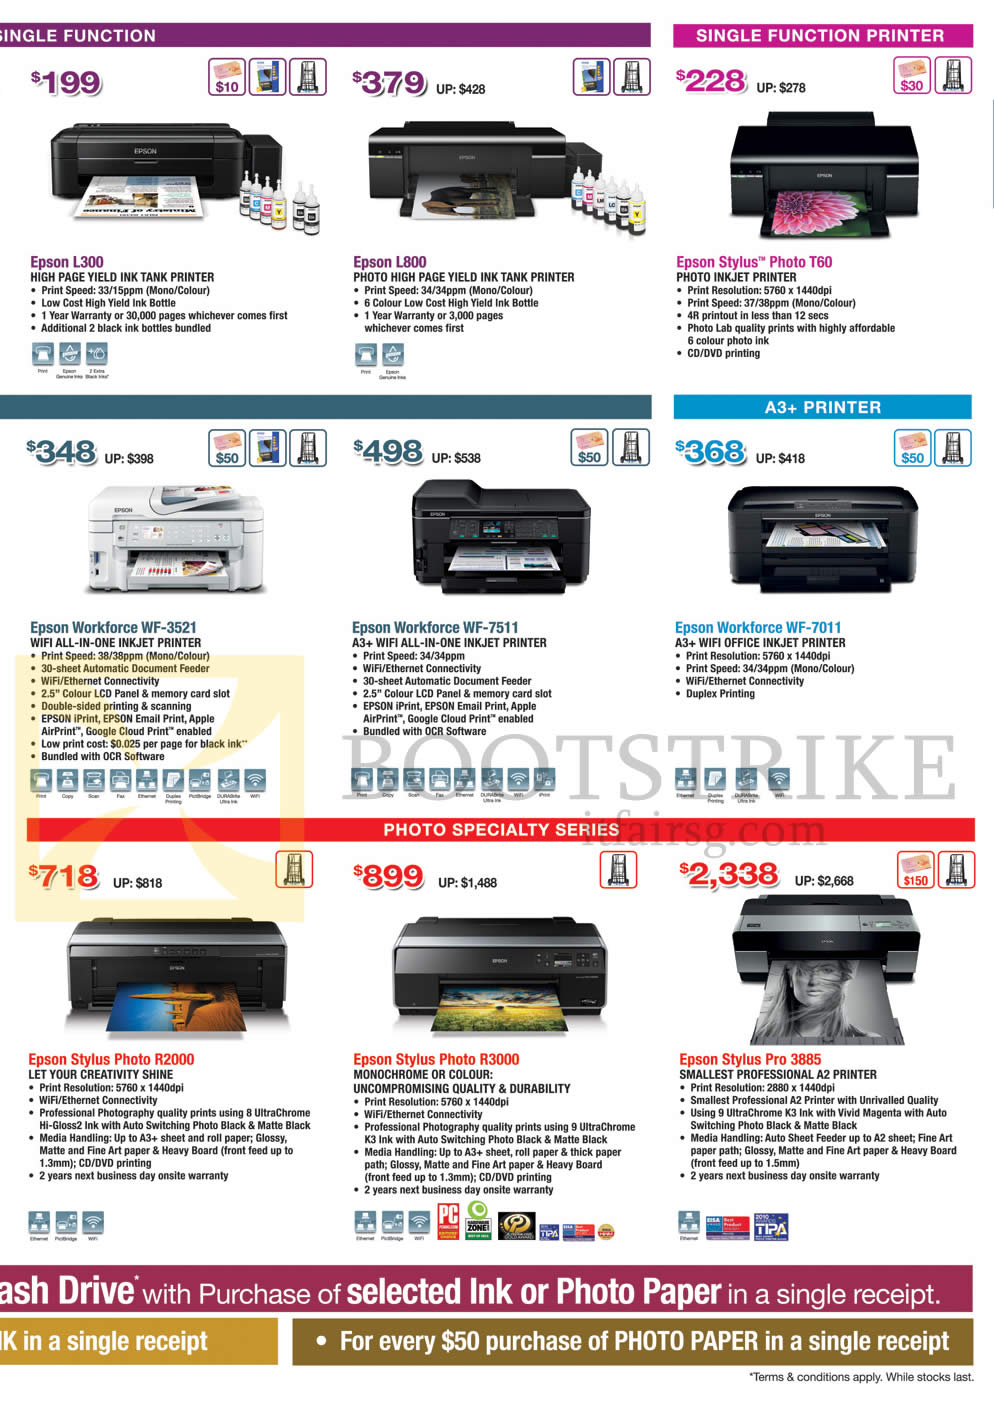 COMEX 2014 price list image brochure of Epson Printers, Photo Printers, L300, L800, T60, Workforce WF-3521, 7511, 7011, Stylus Photo R2000, R3000, Pro3885